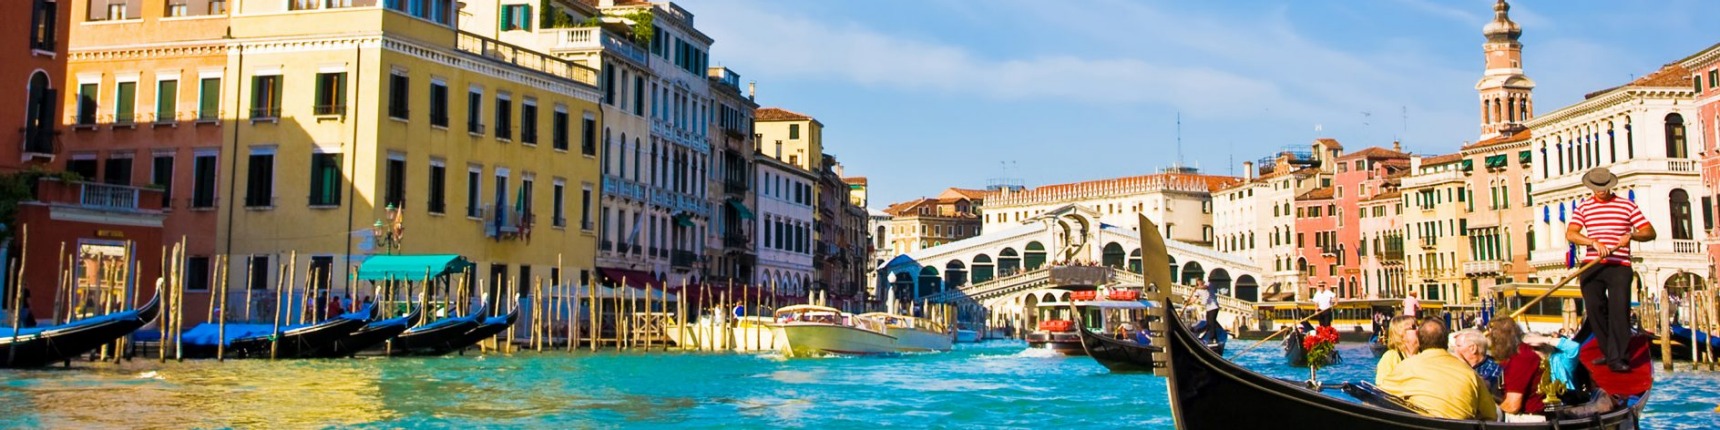 Venice, tourists